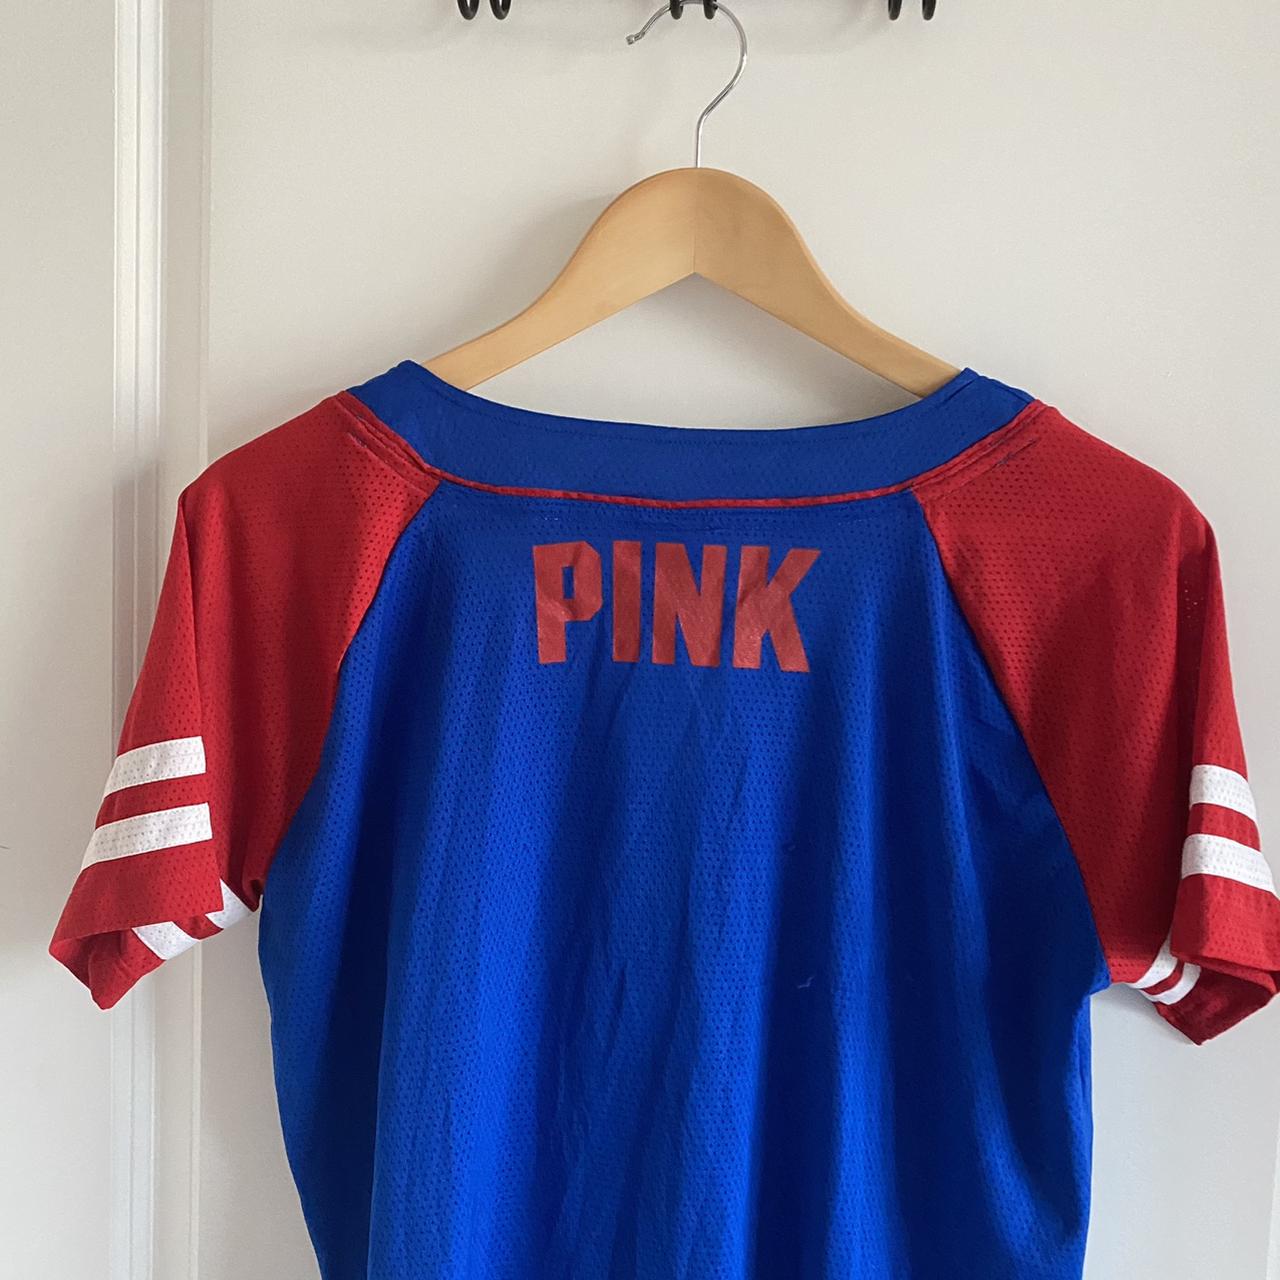 PINK Victoria's Secret, Tops, Vs Pink Braves Shirt